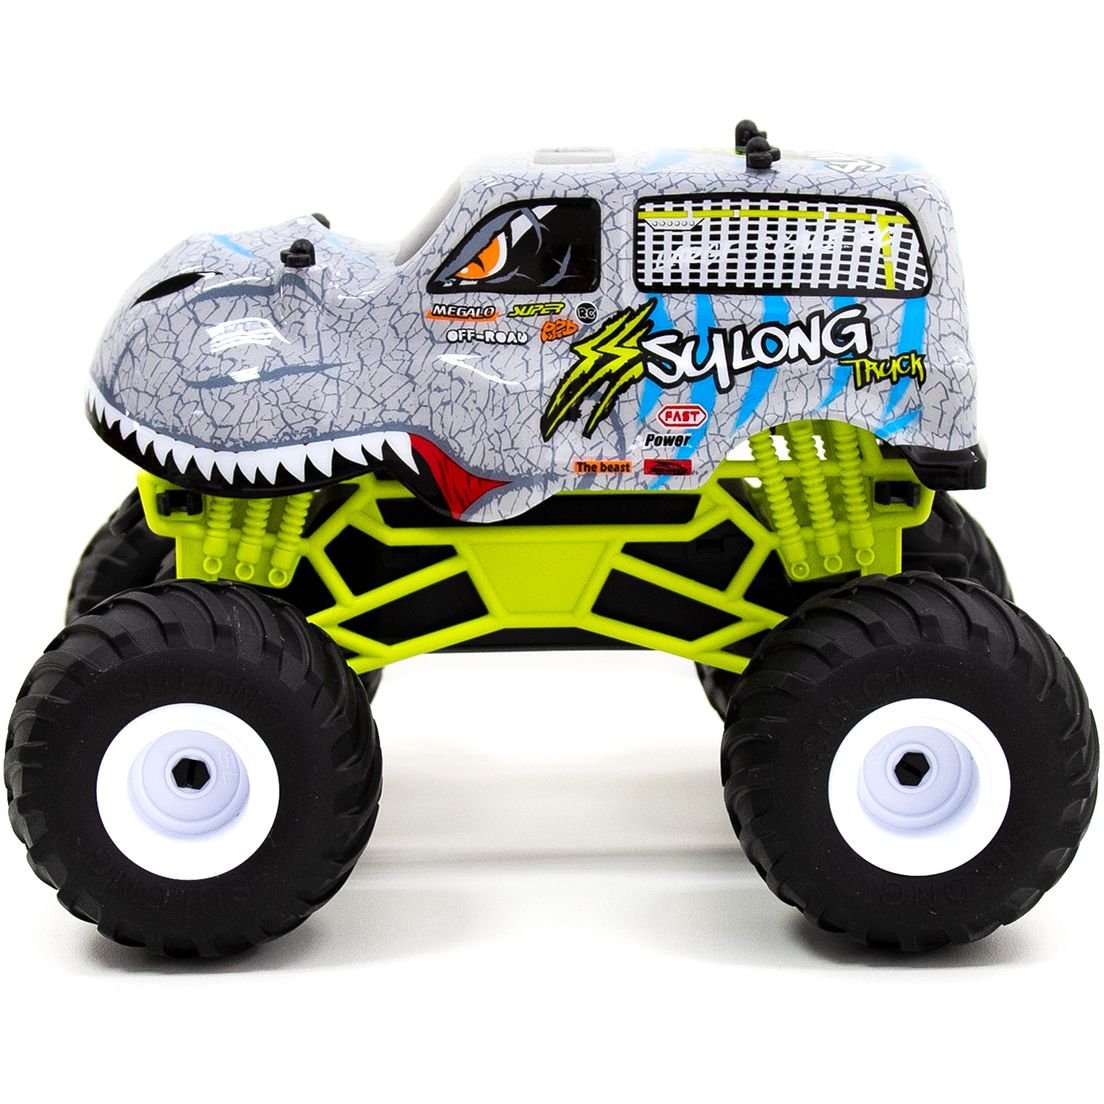 Автомобиль Sulong Toys на р/у Bigfoot Dinosaur 1:16, 27 МГц (SL-360RHGR) - фото 2